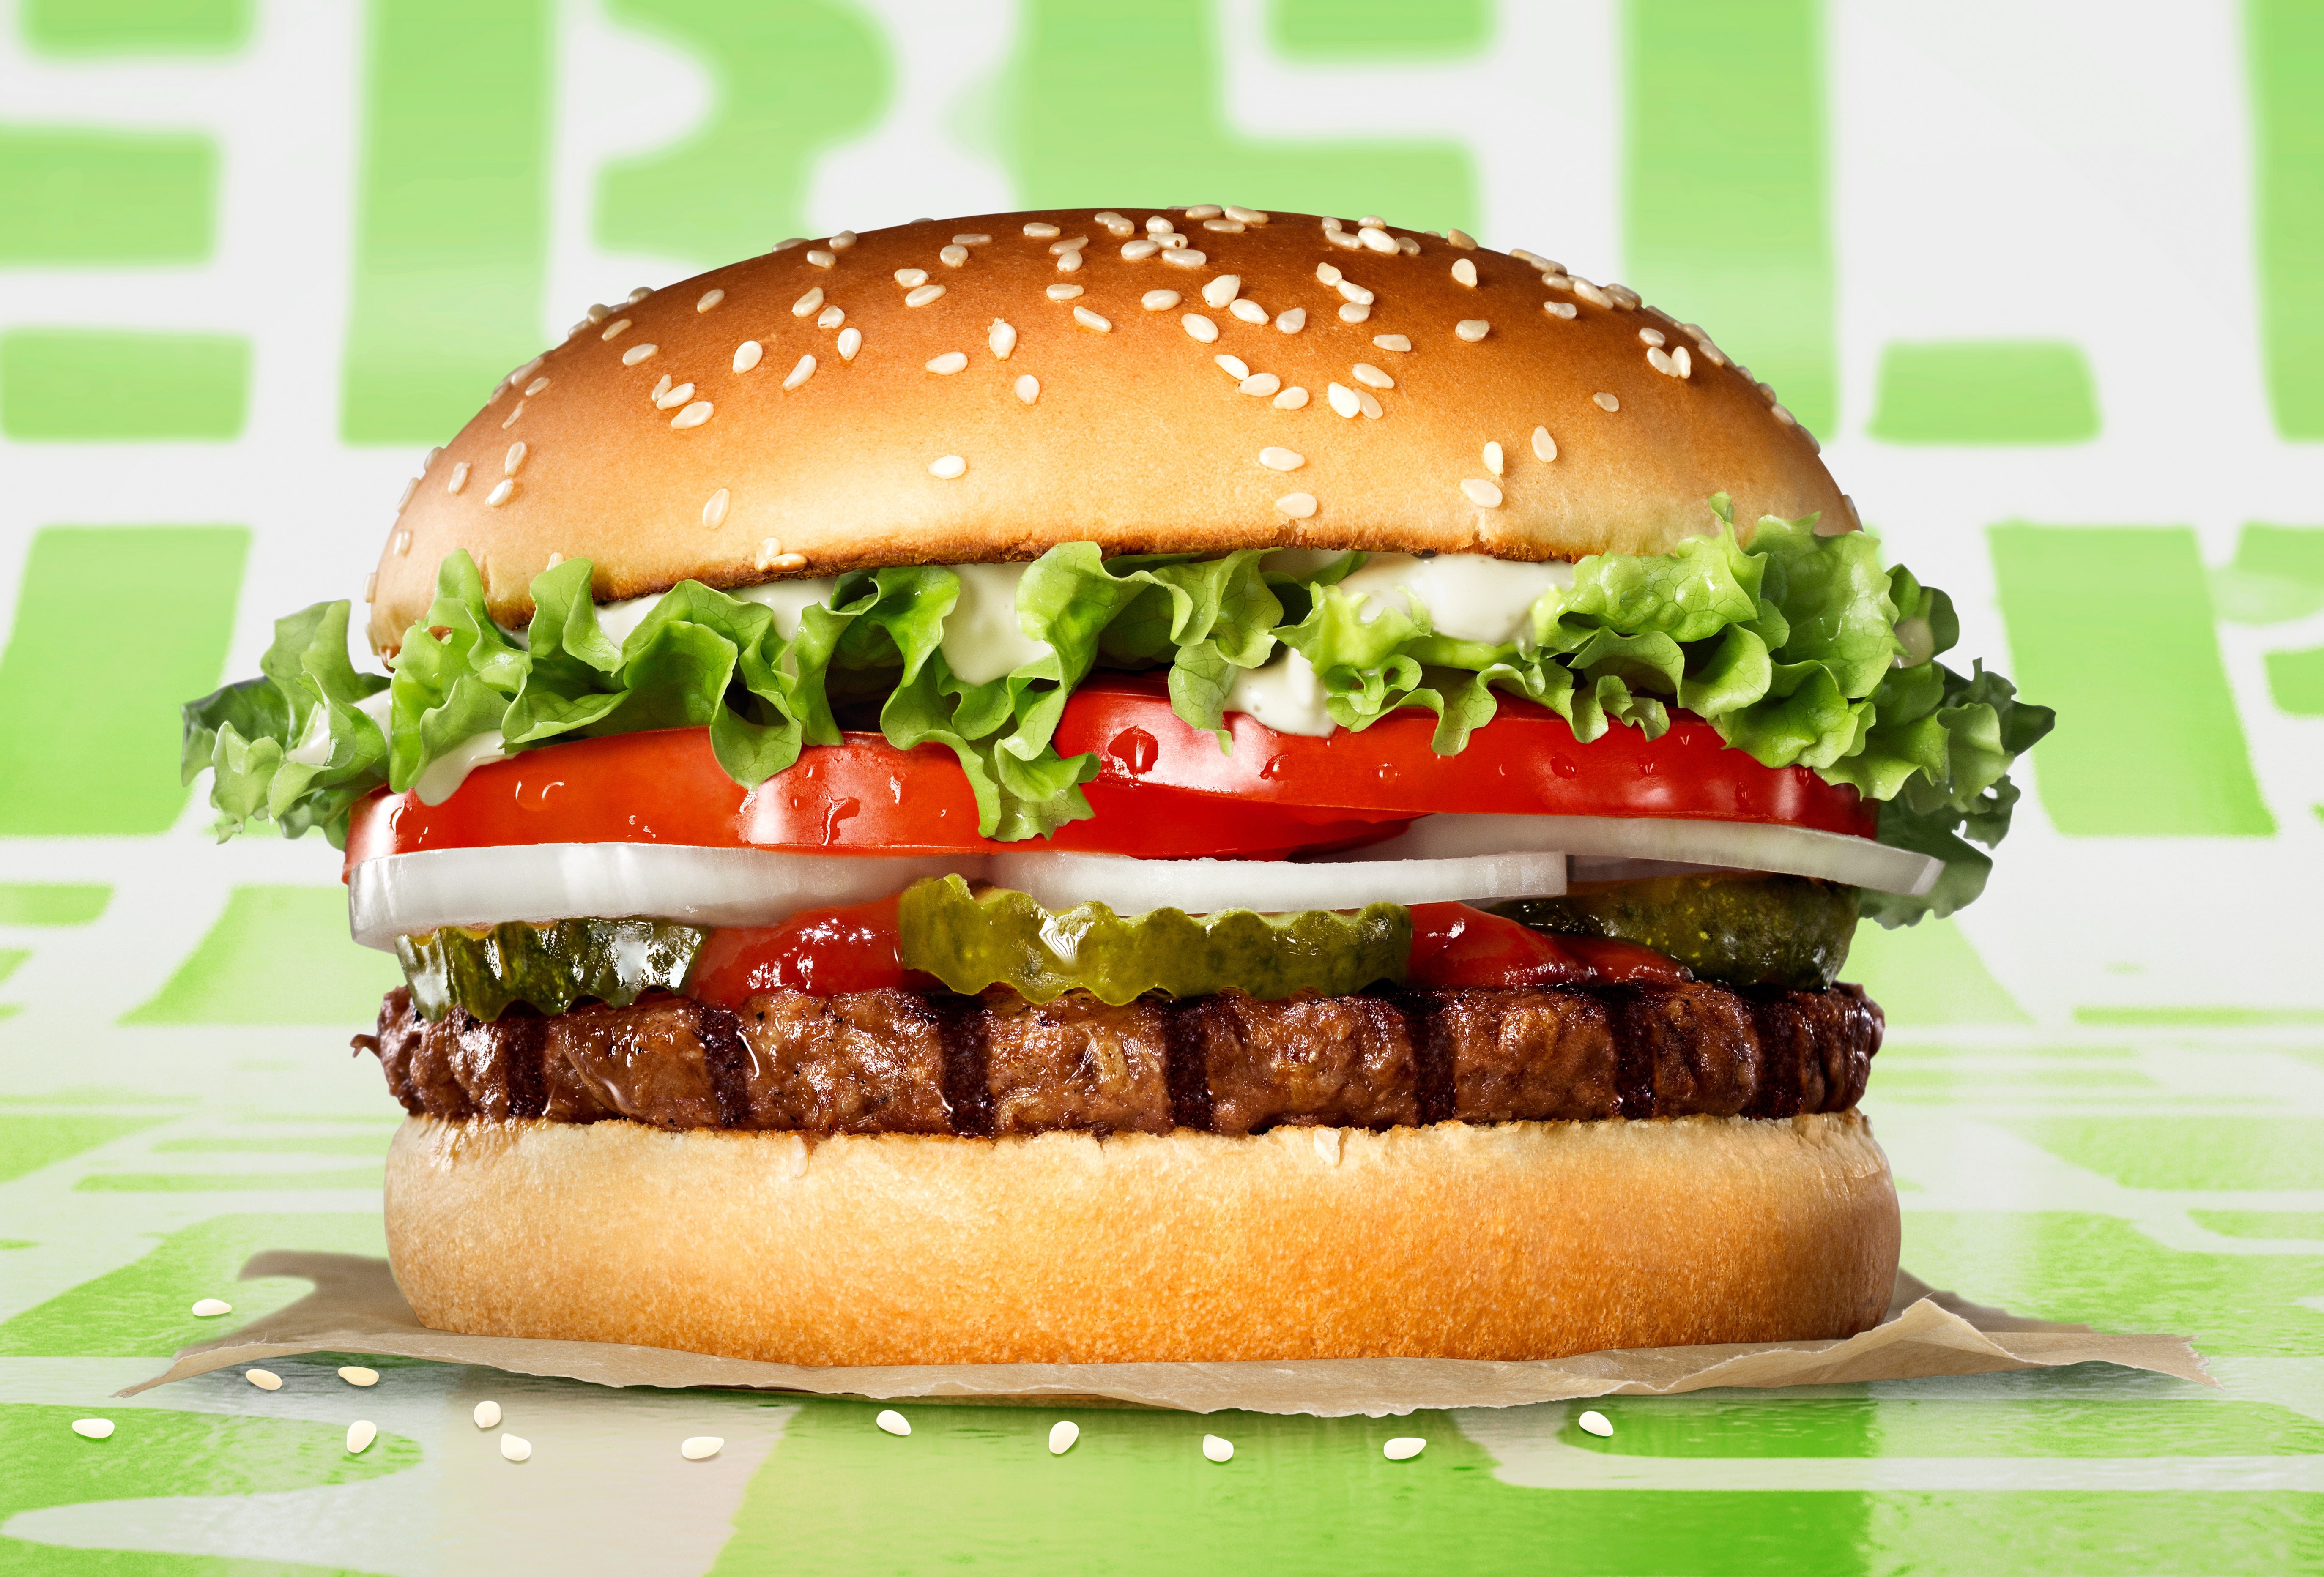 Burger King’s Rebel Whopper vegetarian burger, which is not fake meat or vegan